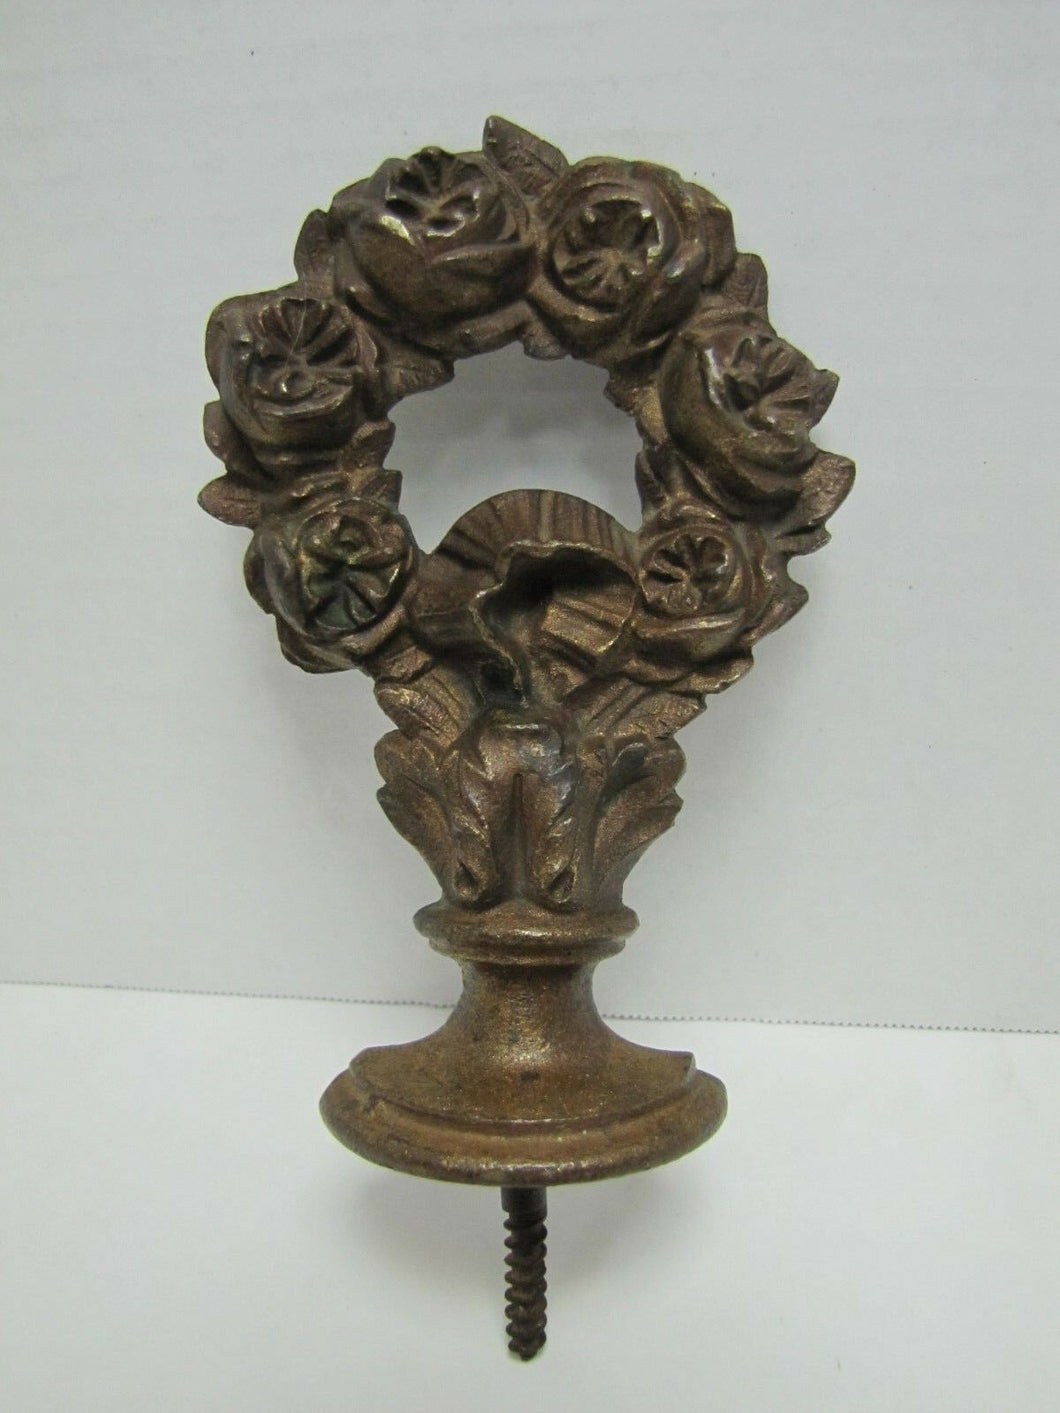 Antique Cast Brass Flower Roses Basket Urn Finial Architectural Hardware Element